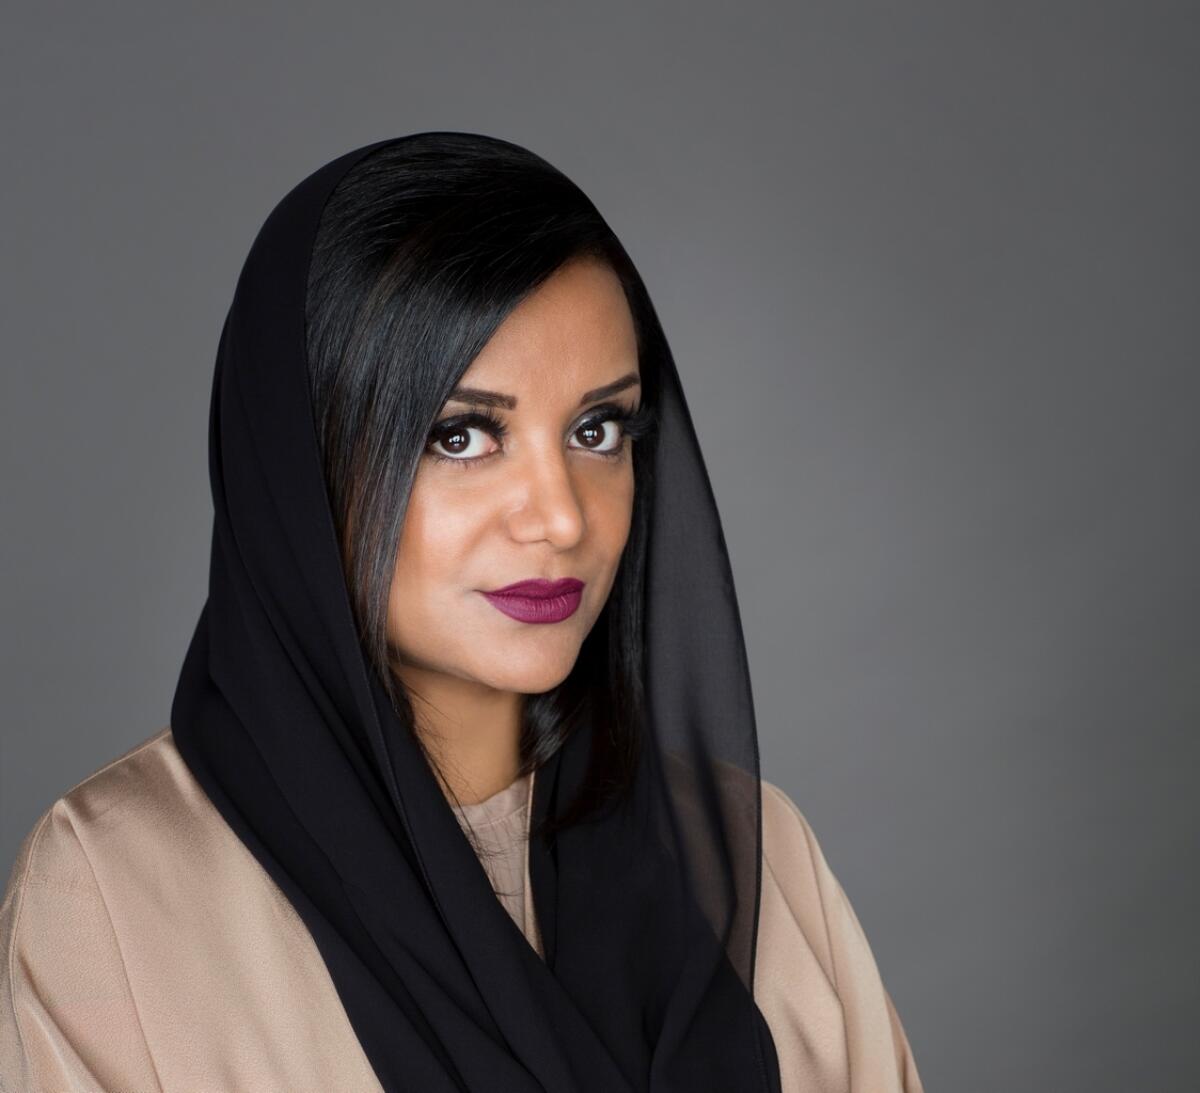 Emirati director Nayla Al Khaja